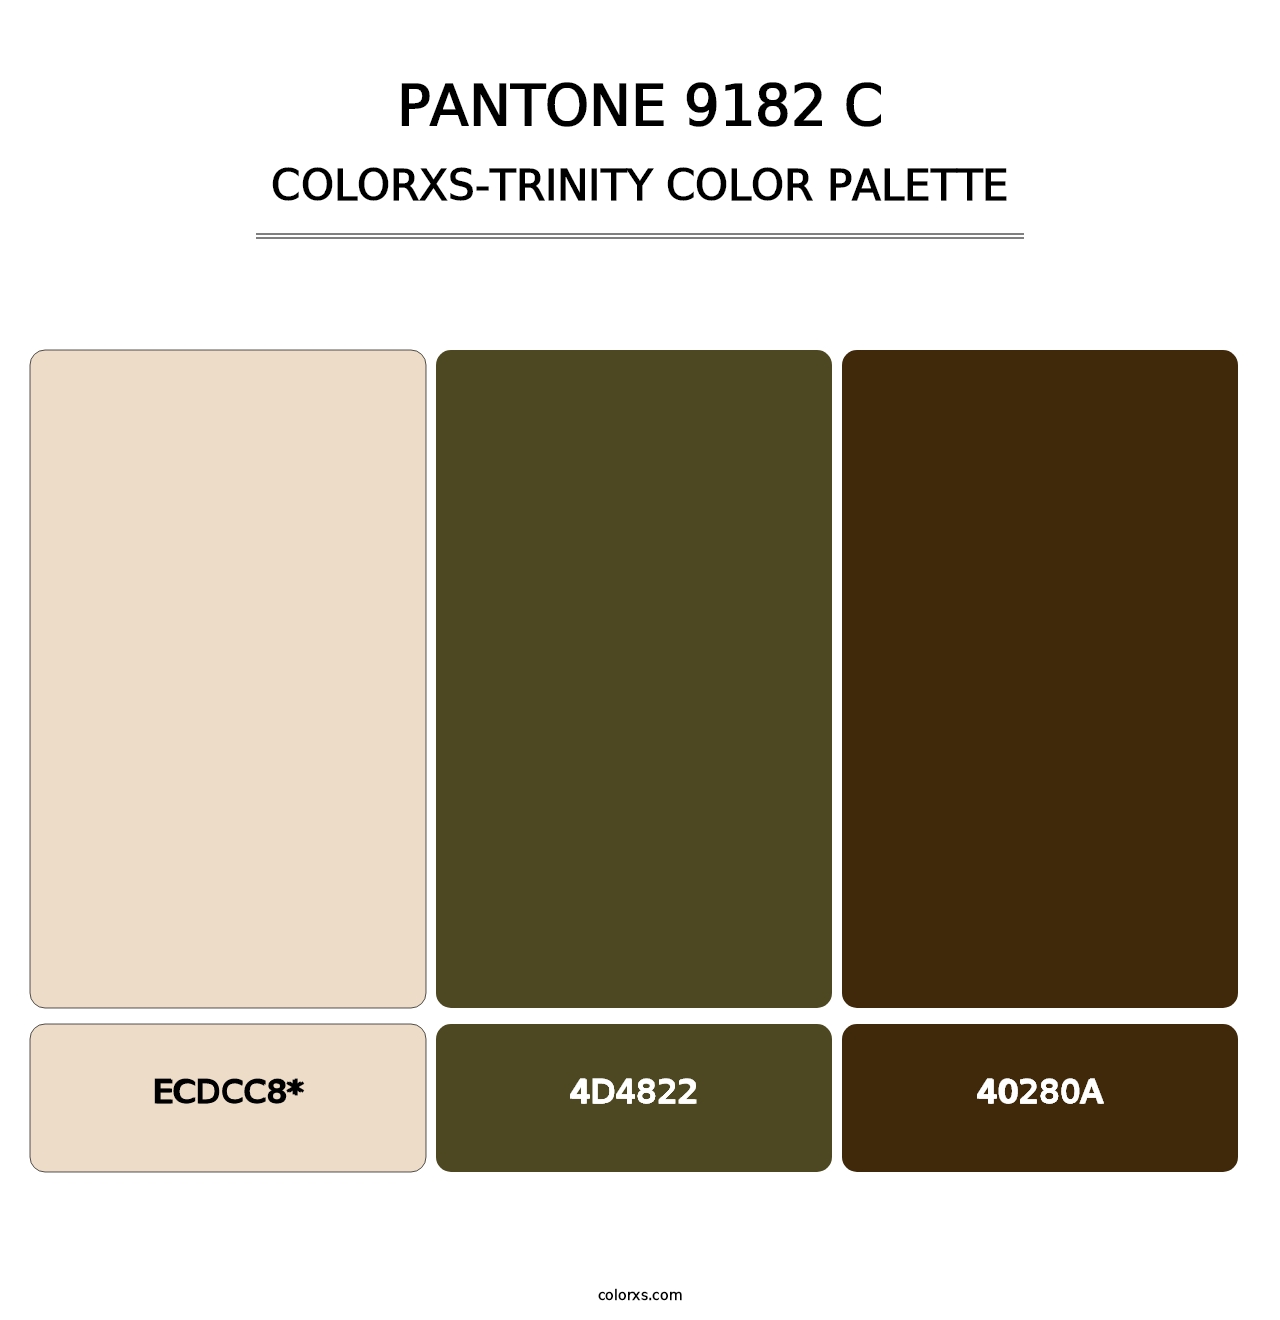 PANTONE 9182 C - Colorxs Trinity Palette